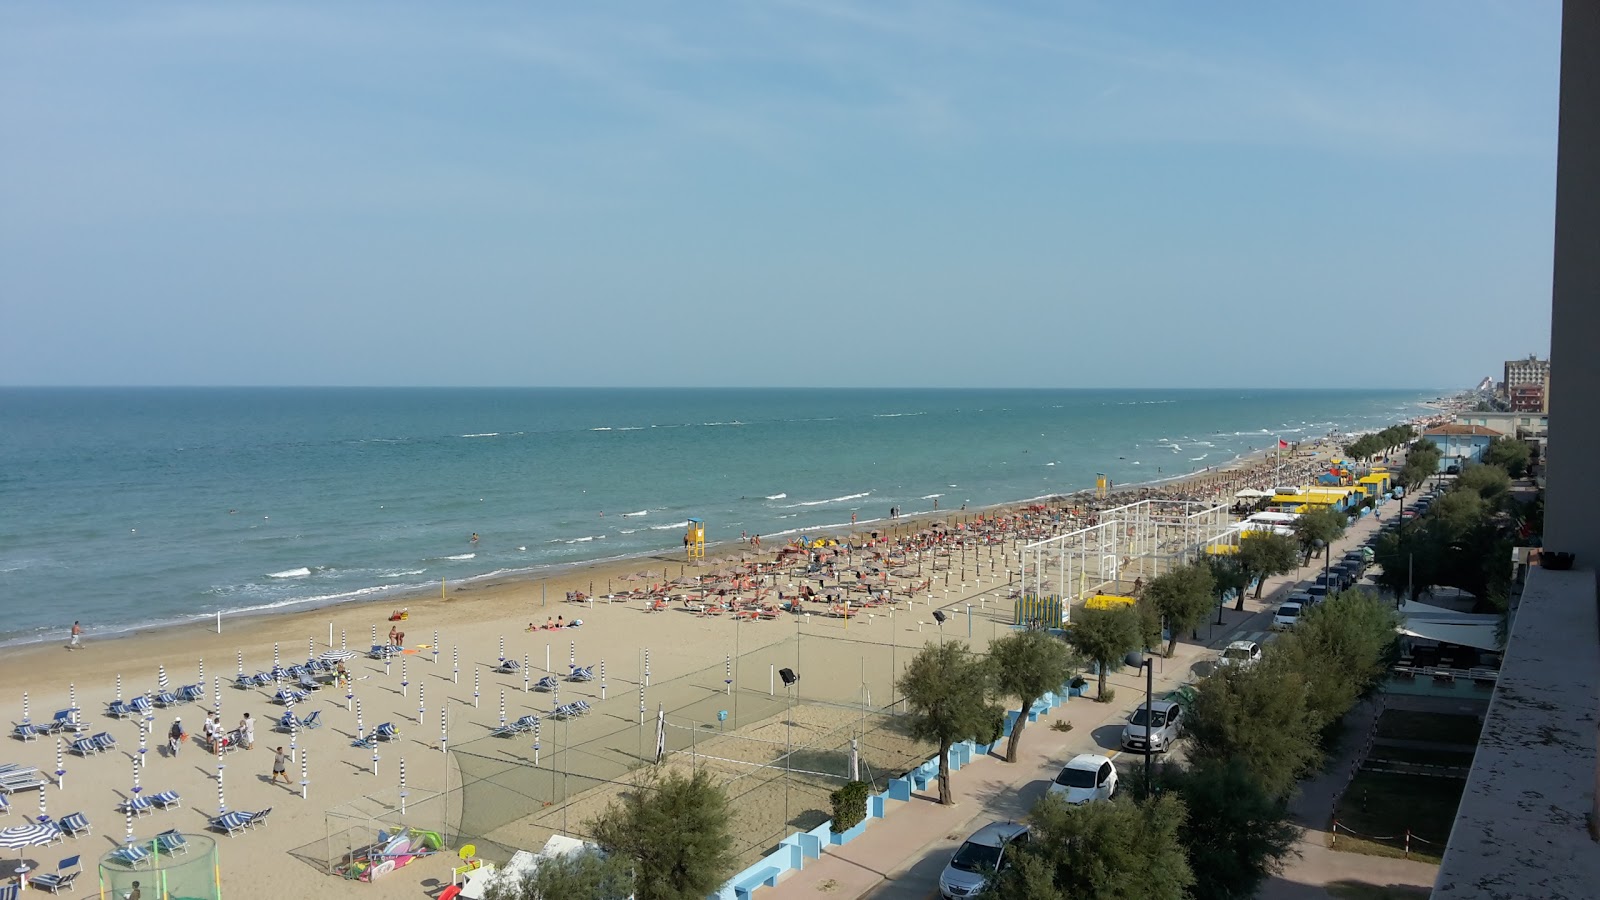 Photo of Marotta beach beach resort area